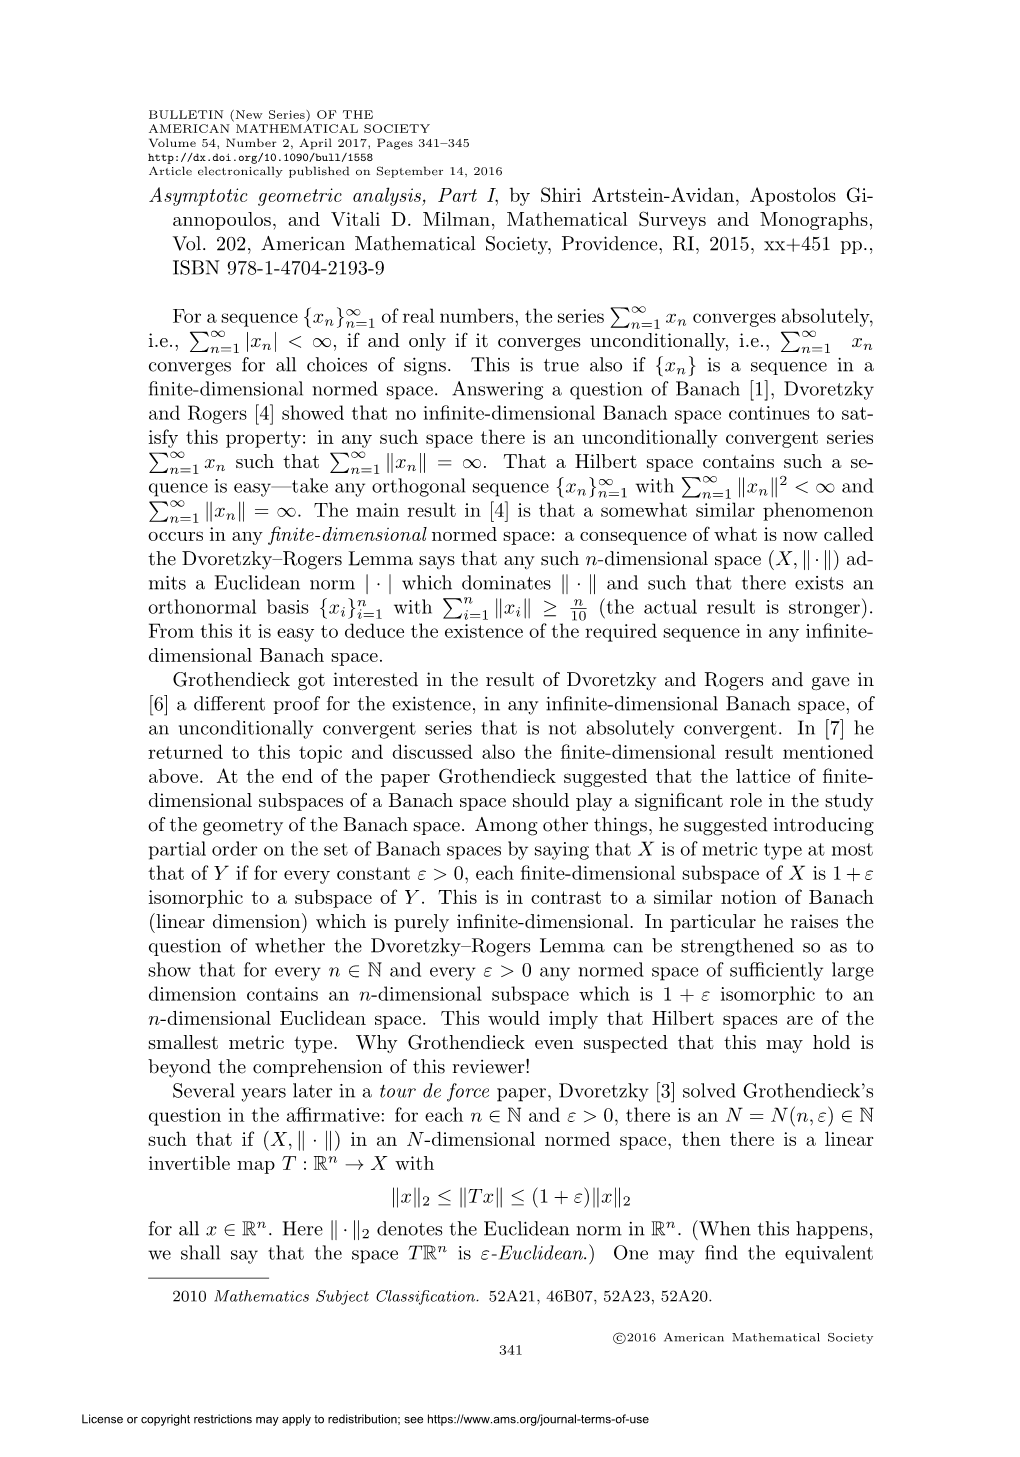 Asymptotic Geometric Analysis, Part I, by Shiri Artstein-Avidan, Apostolos Gi- Annopoulos, and Vitali D. Milman, Mathematical Surveys and Monographs, Vol